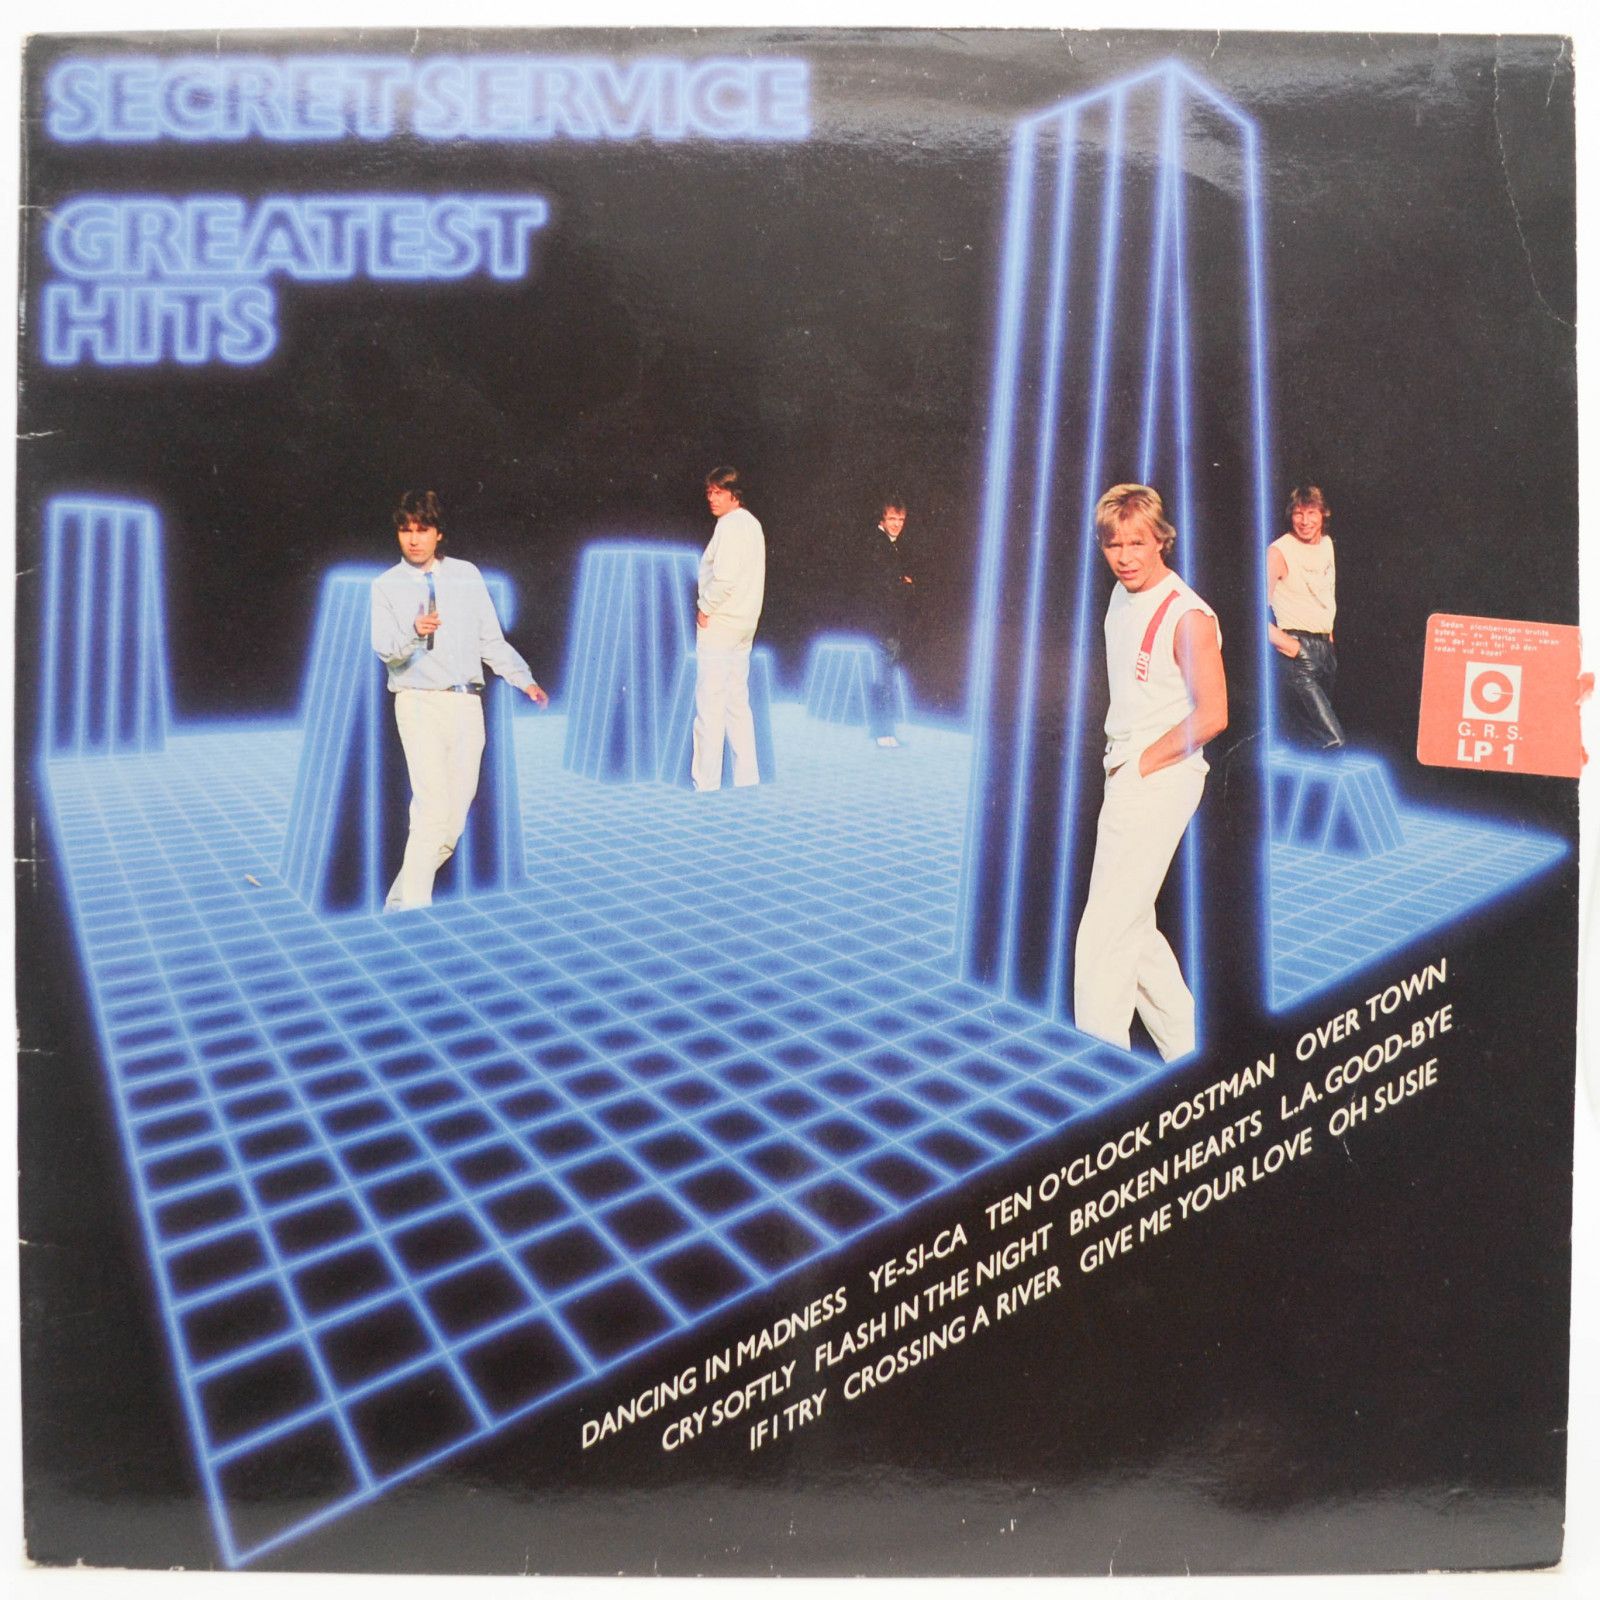 Secret Service — Greatest Hits (1-st, Sweden), 1982